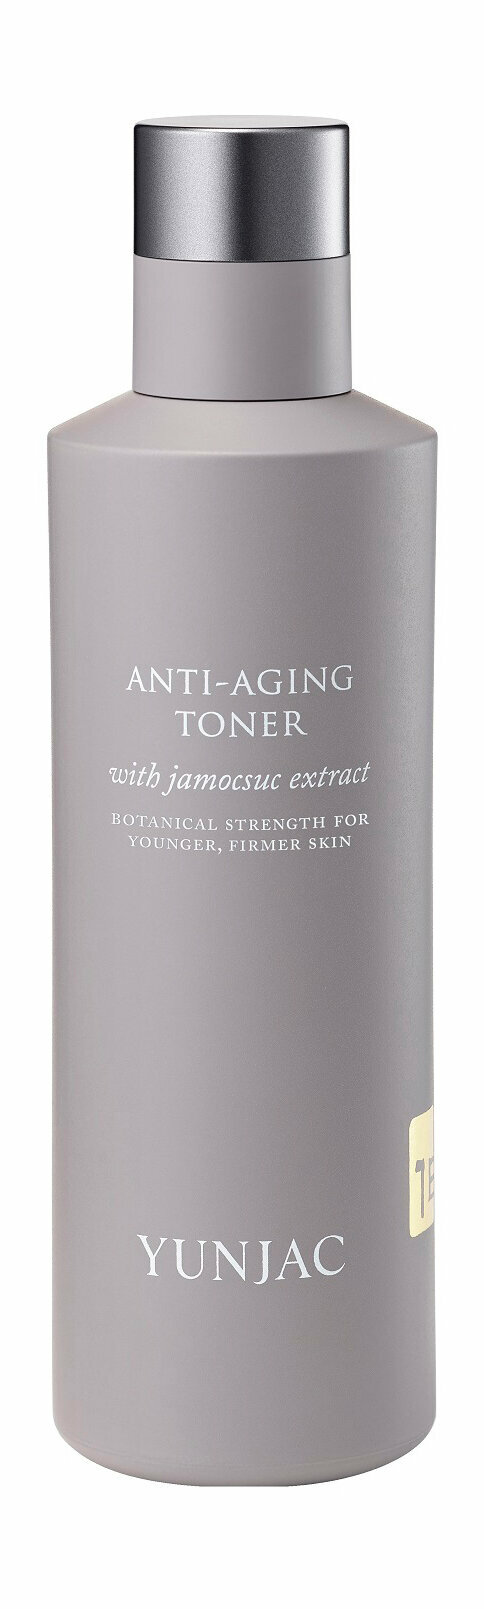 YUNJAC Anti-Aging Toner with Jamocsuc Extract Тоник для лица с люцерной антивозрастной, 150 мл